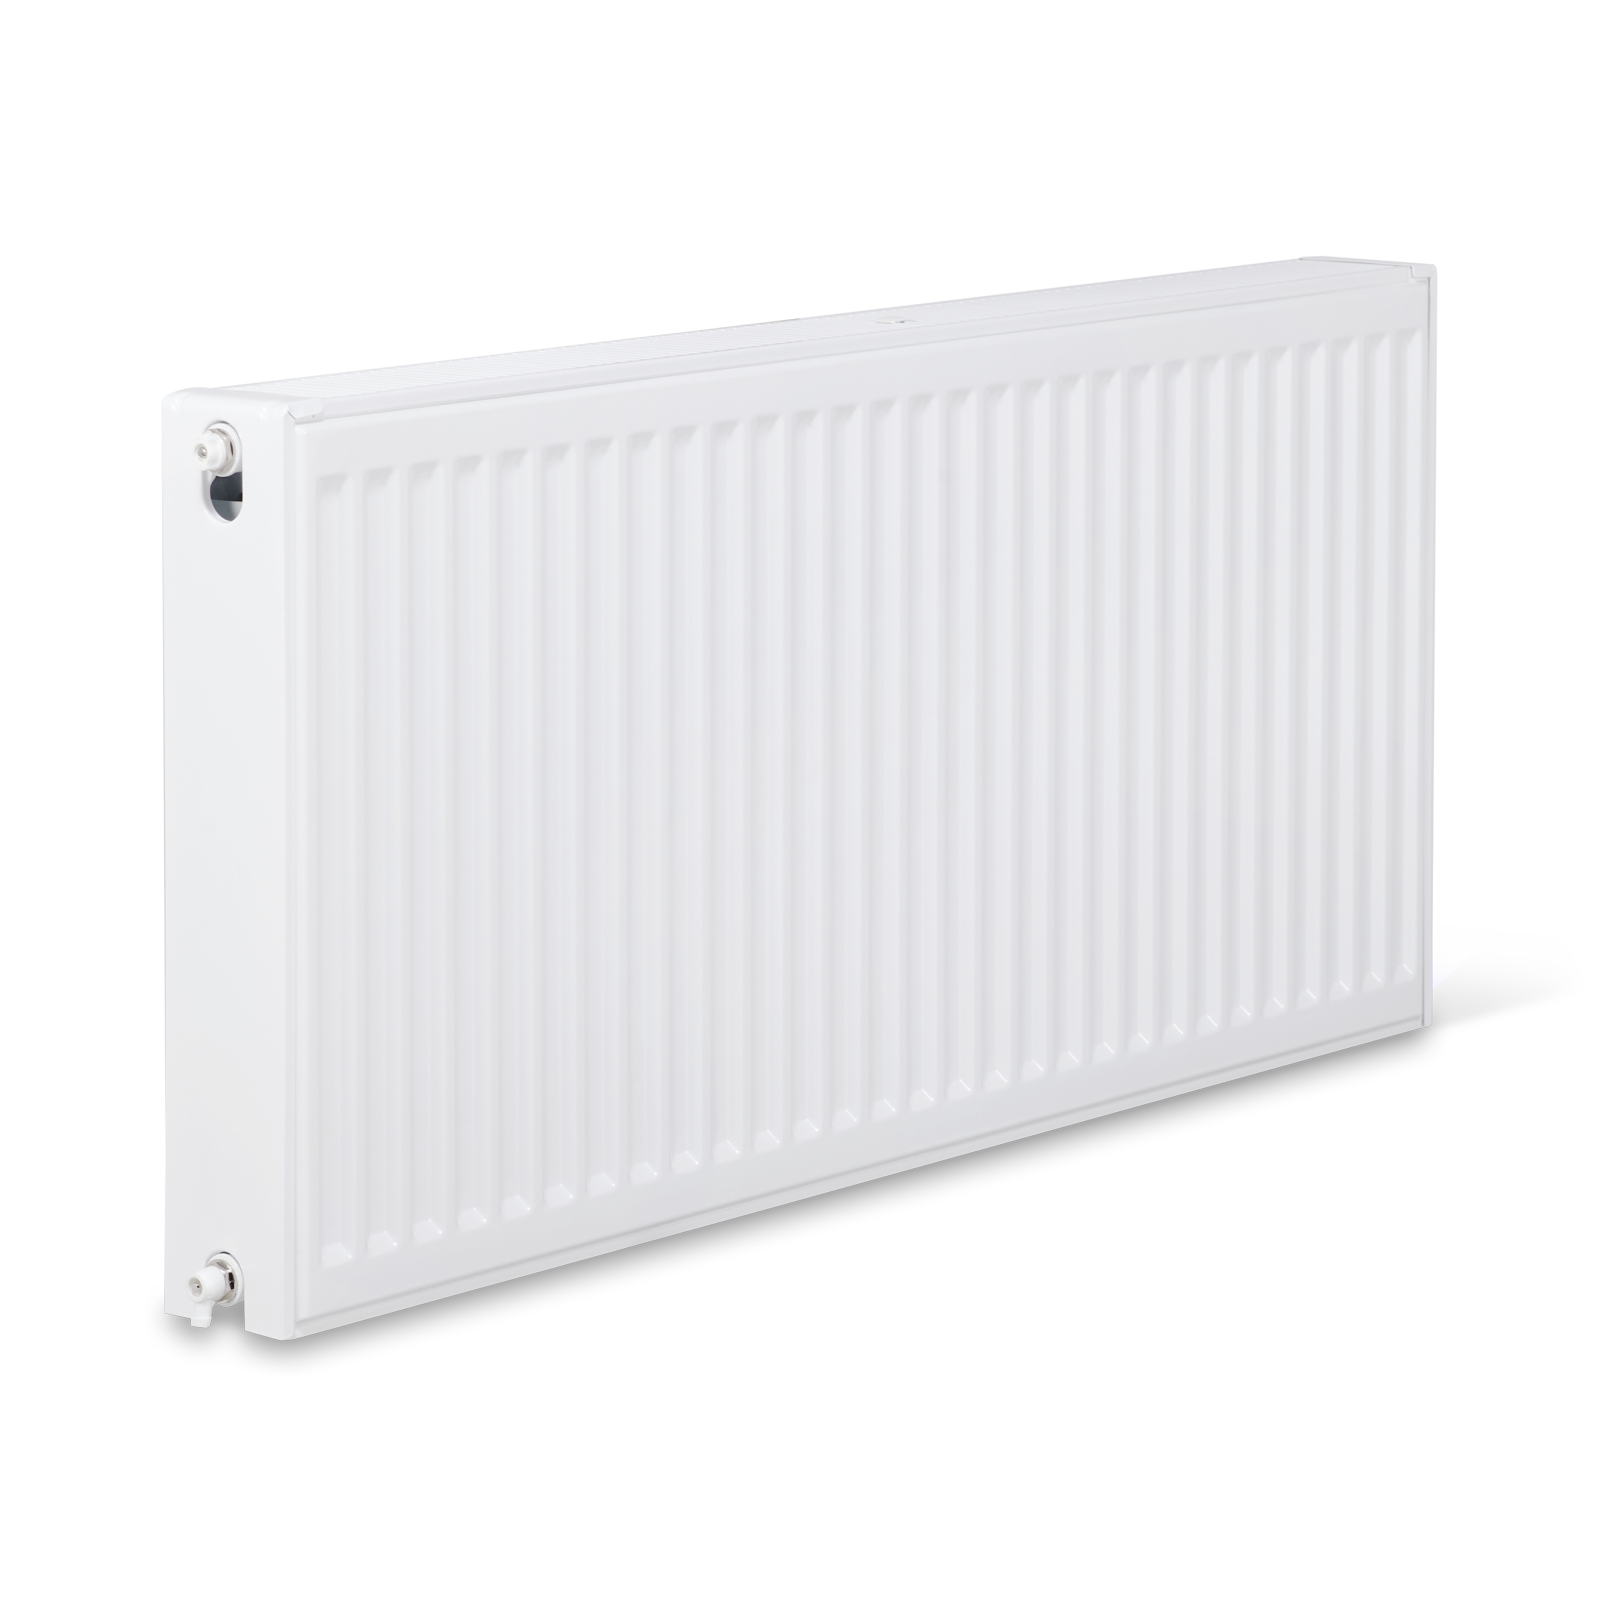 Thermrad horizontale radiator Compact-4 Plus